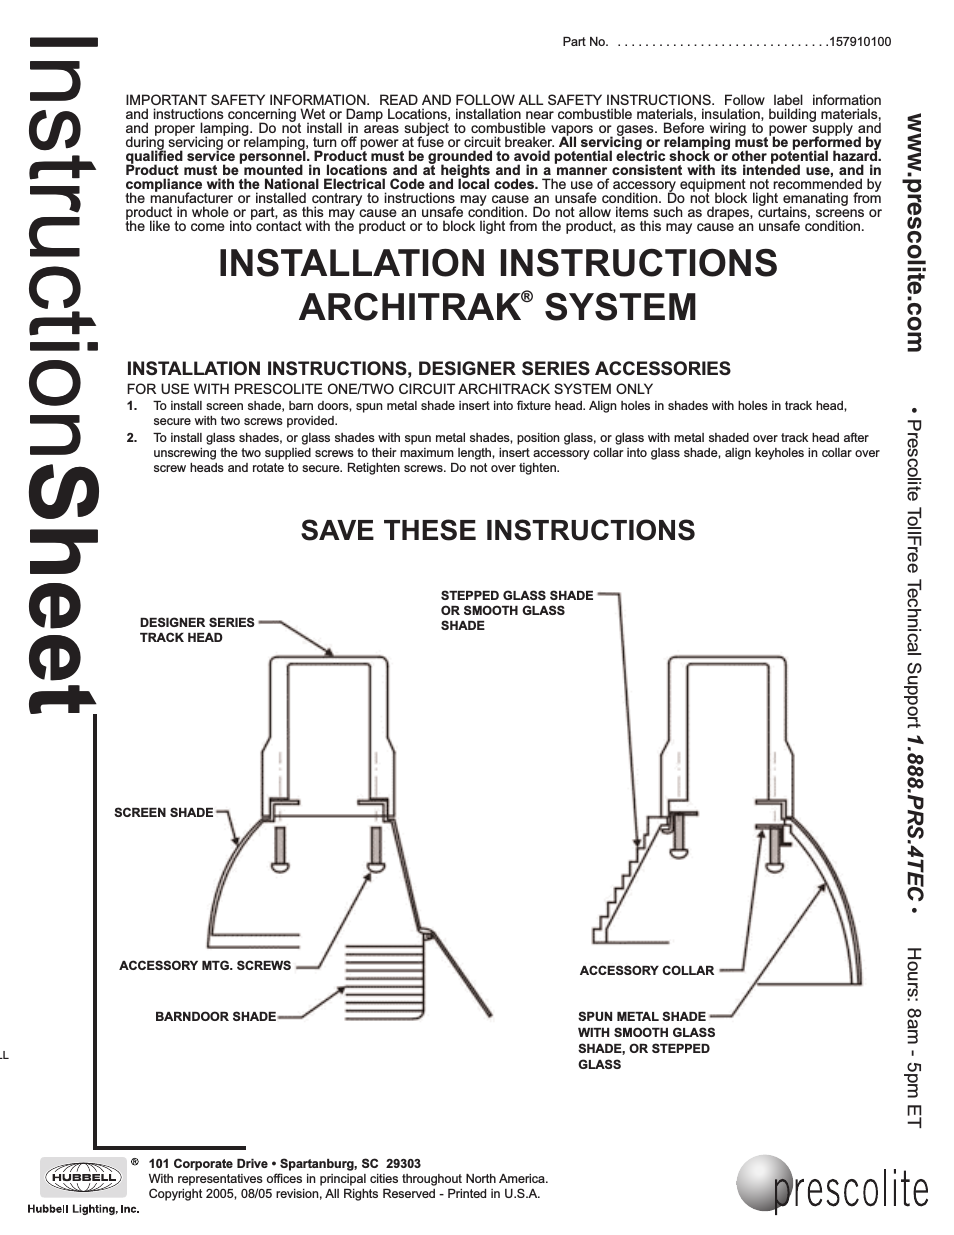 ARCHITRAK SYSTEM Designer Series Accessories